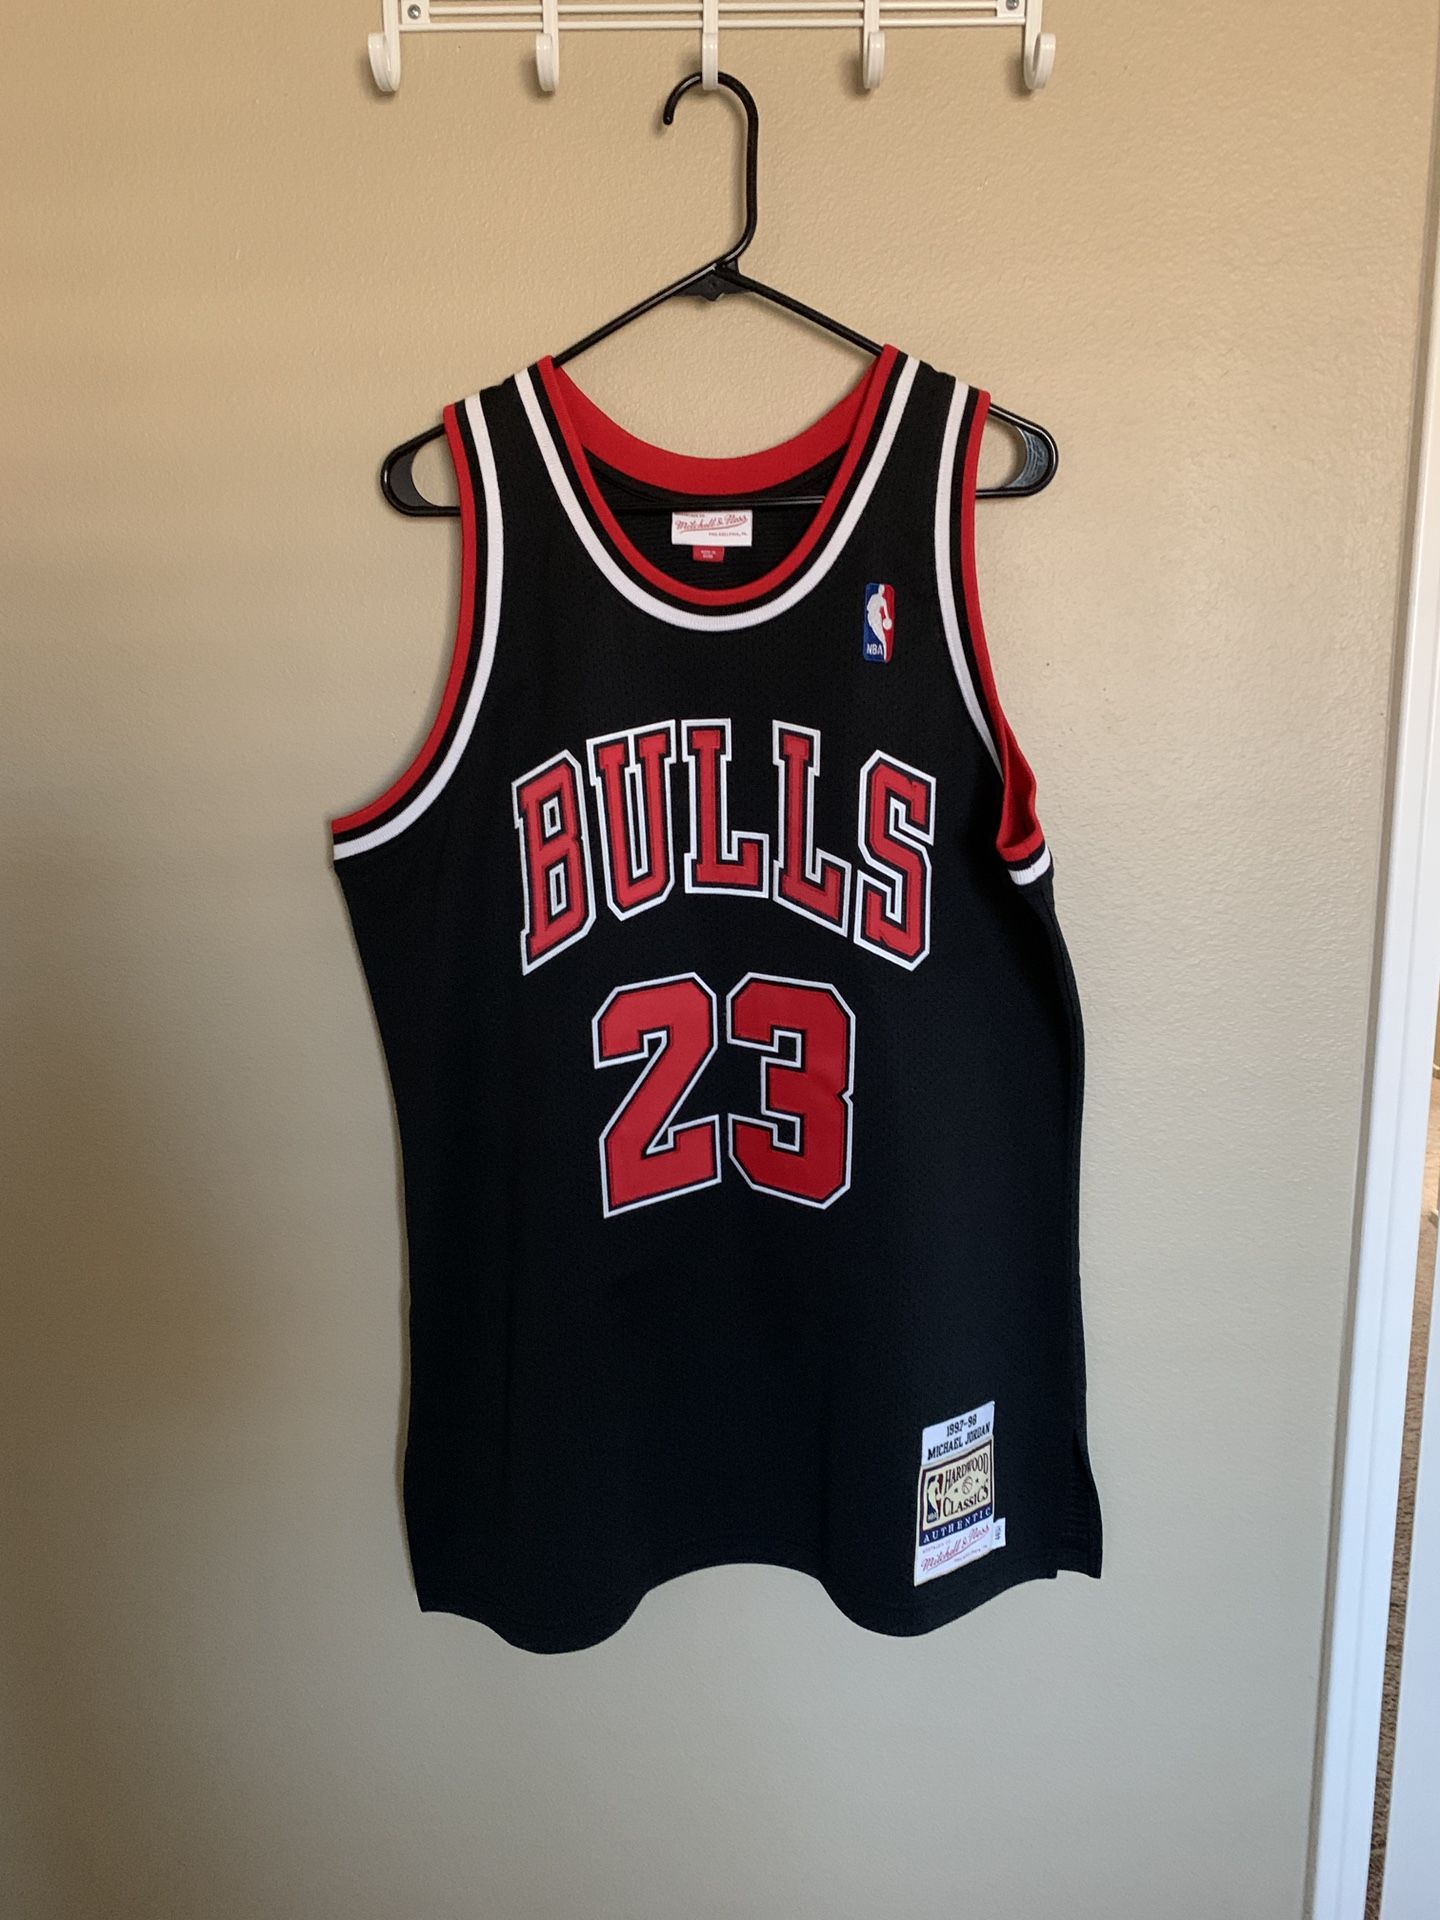 Men M&N Jordan 23 Chicago Bulls’98 Authentic Jersey 44 (Large). Great condition.